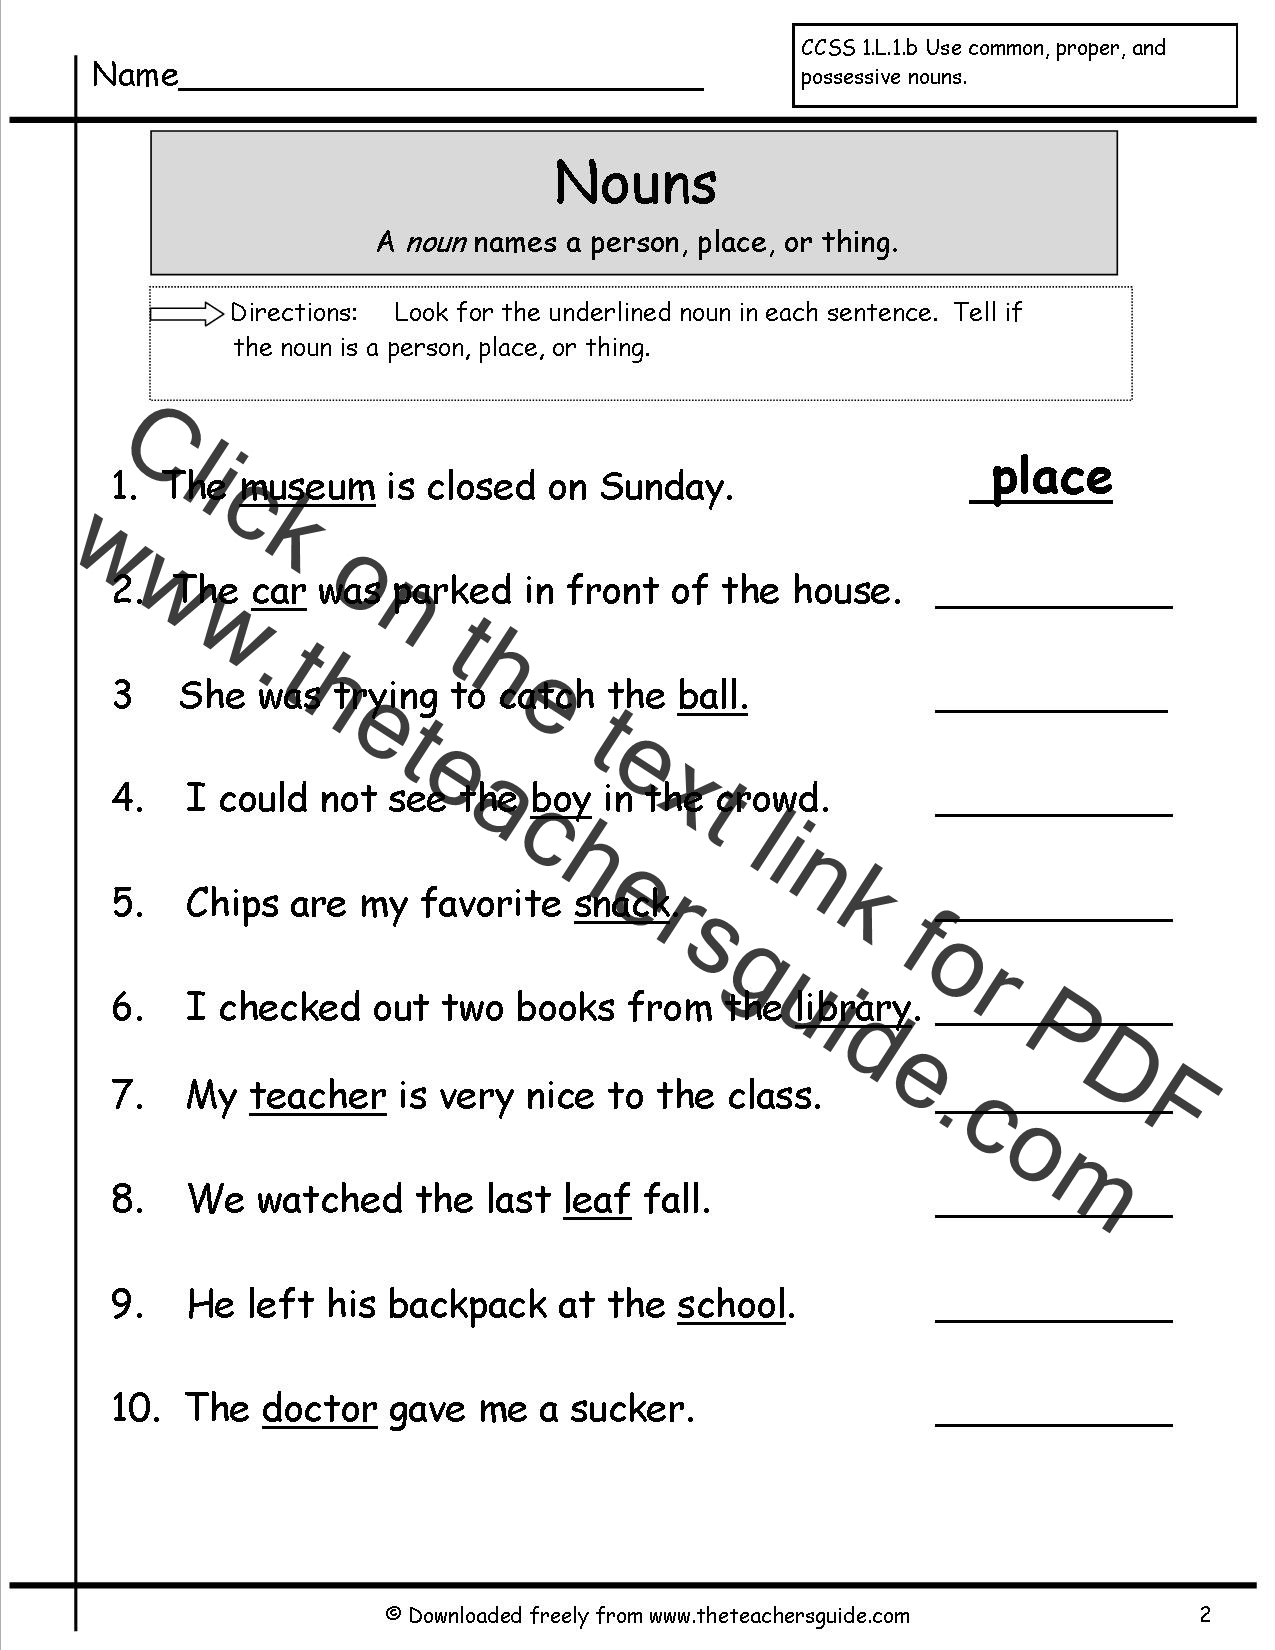 common-noun-and-proper-noun-worksheet-pdf-free-printable-for-grade-1